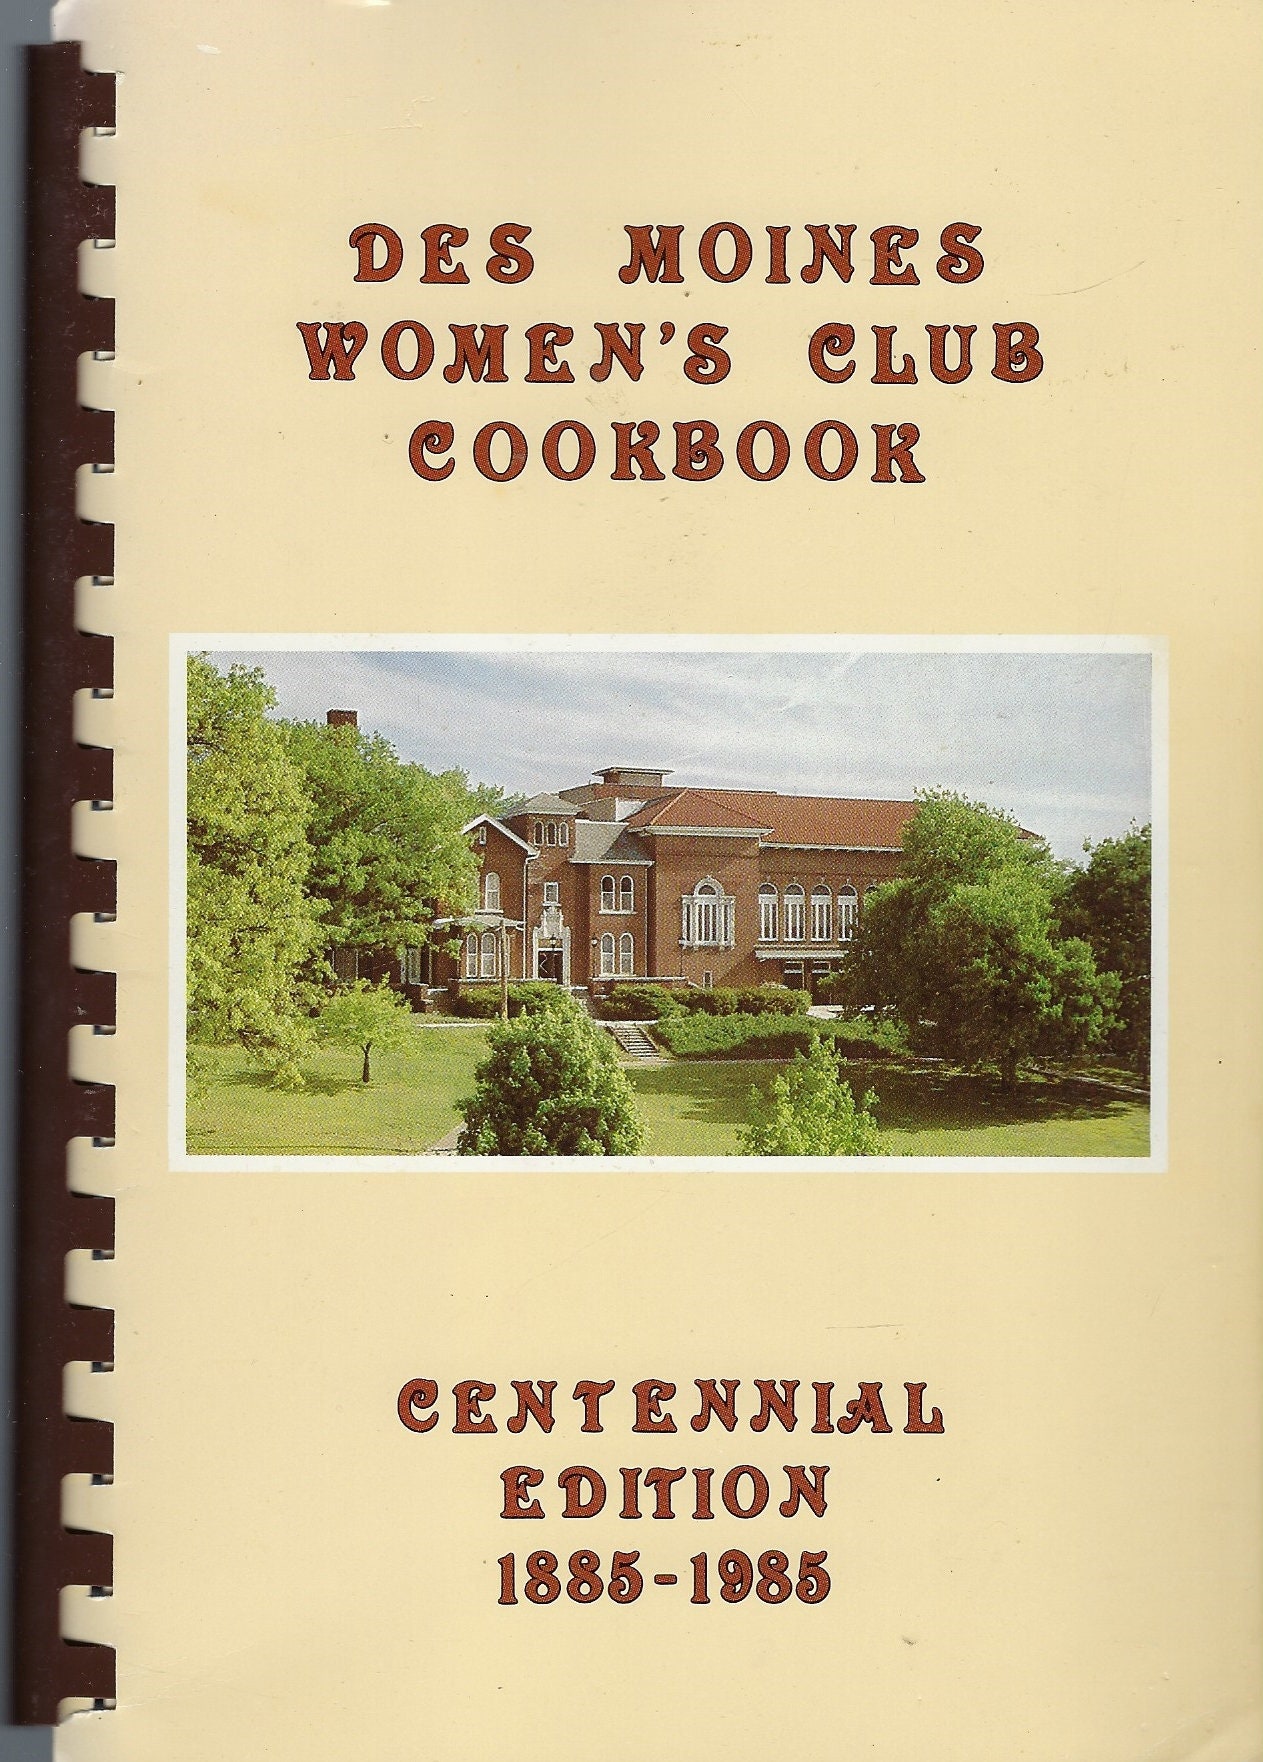 Des Moines Iowa 1985 Women's Club Centennial Edition Cookbook Ia Community Recipes Plus Local History Souvenir Collectable Spiral Bound Rare